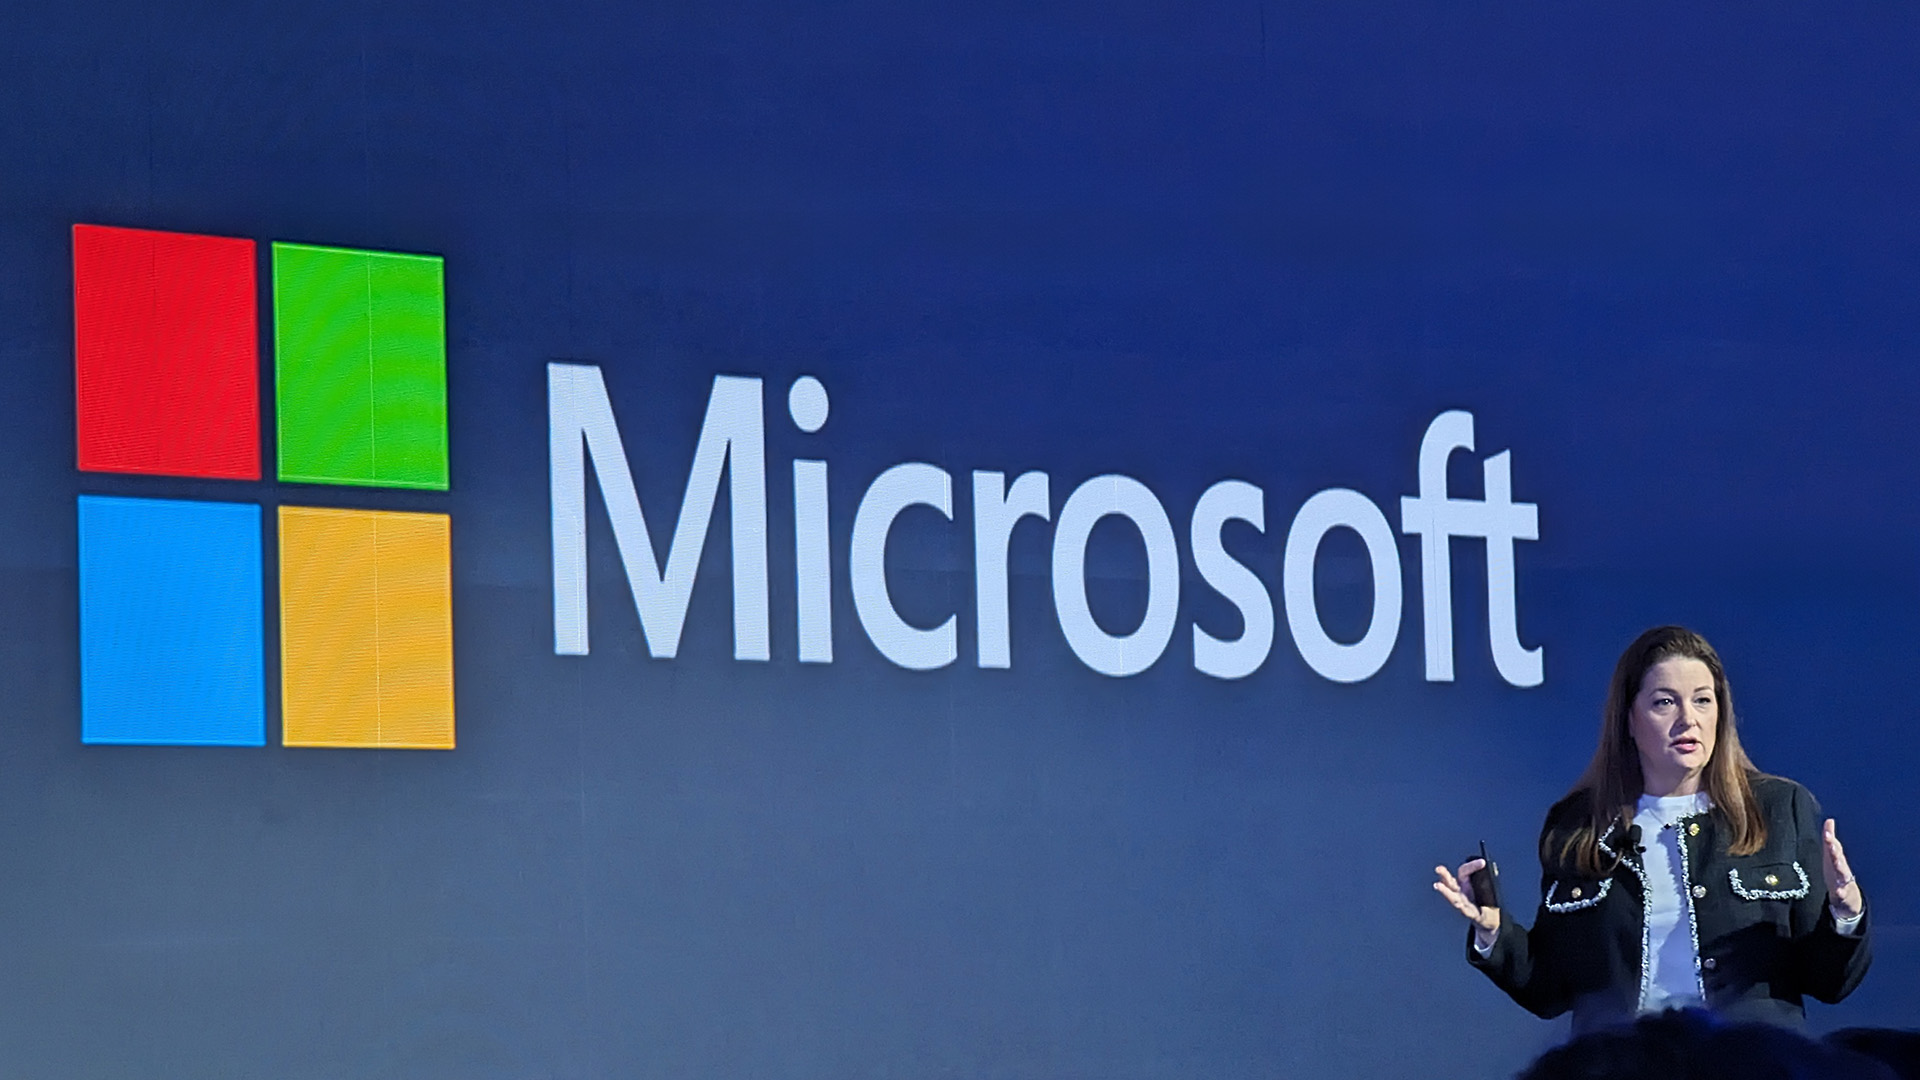 Michelle Johnston Holthaus Intel adına sahnede Microsoft hakkında konuşuyor